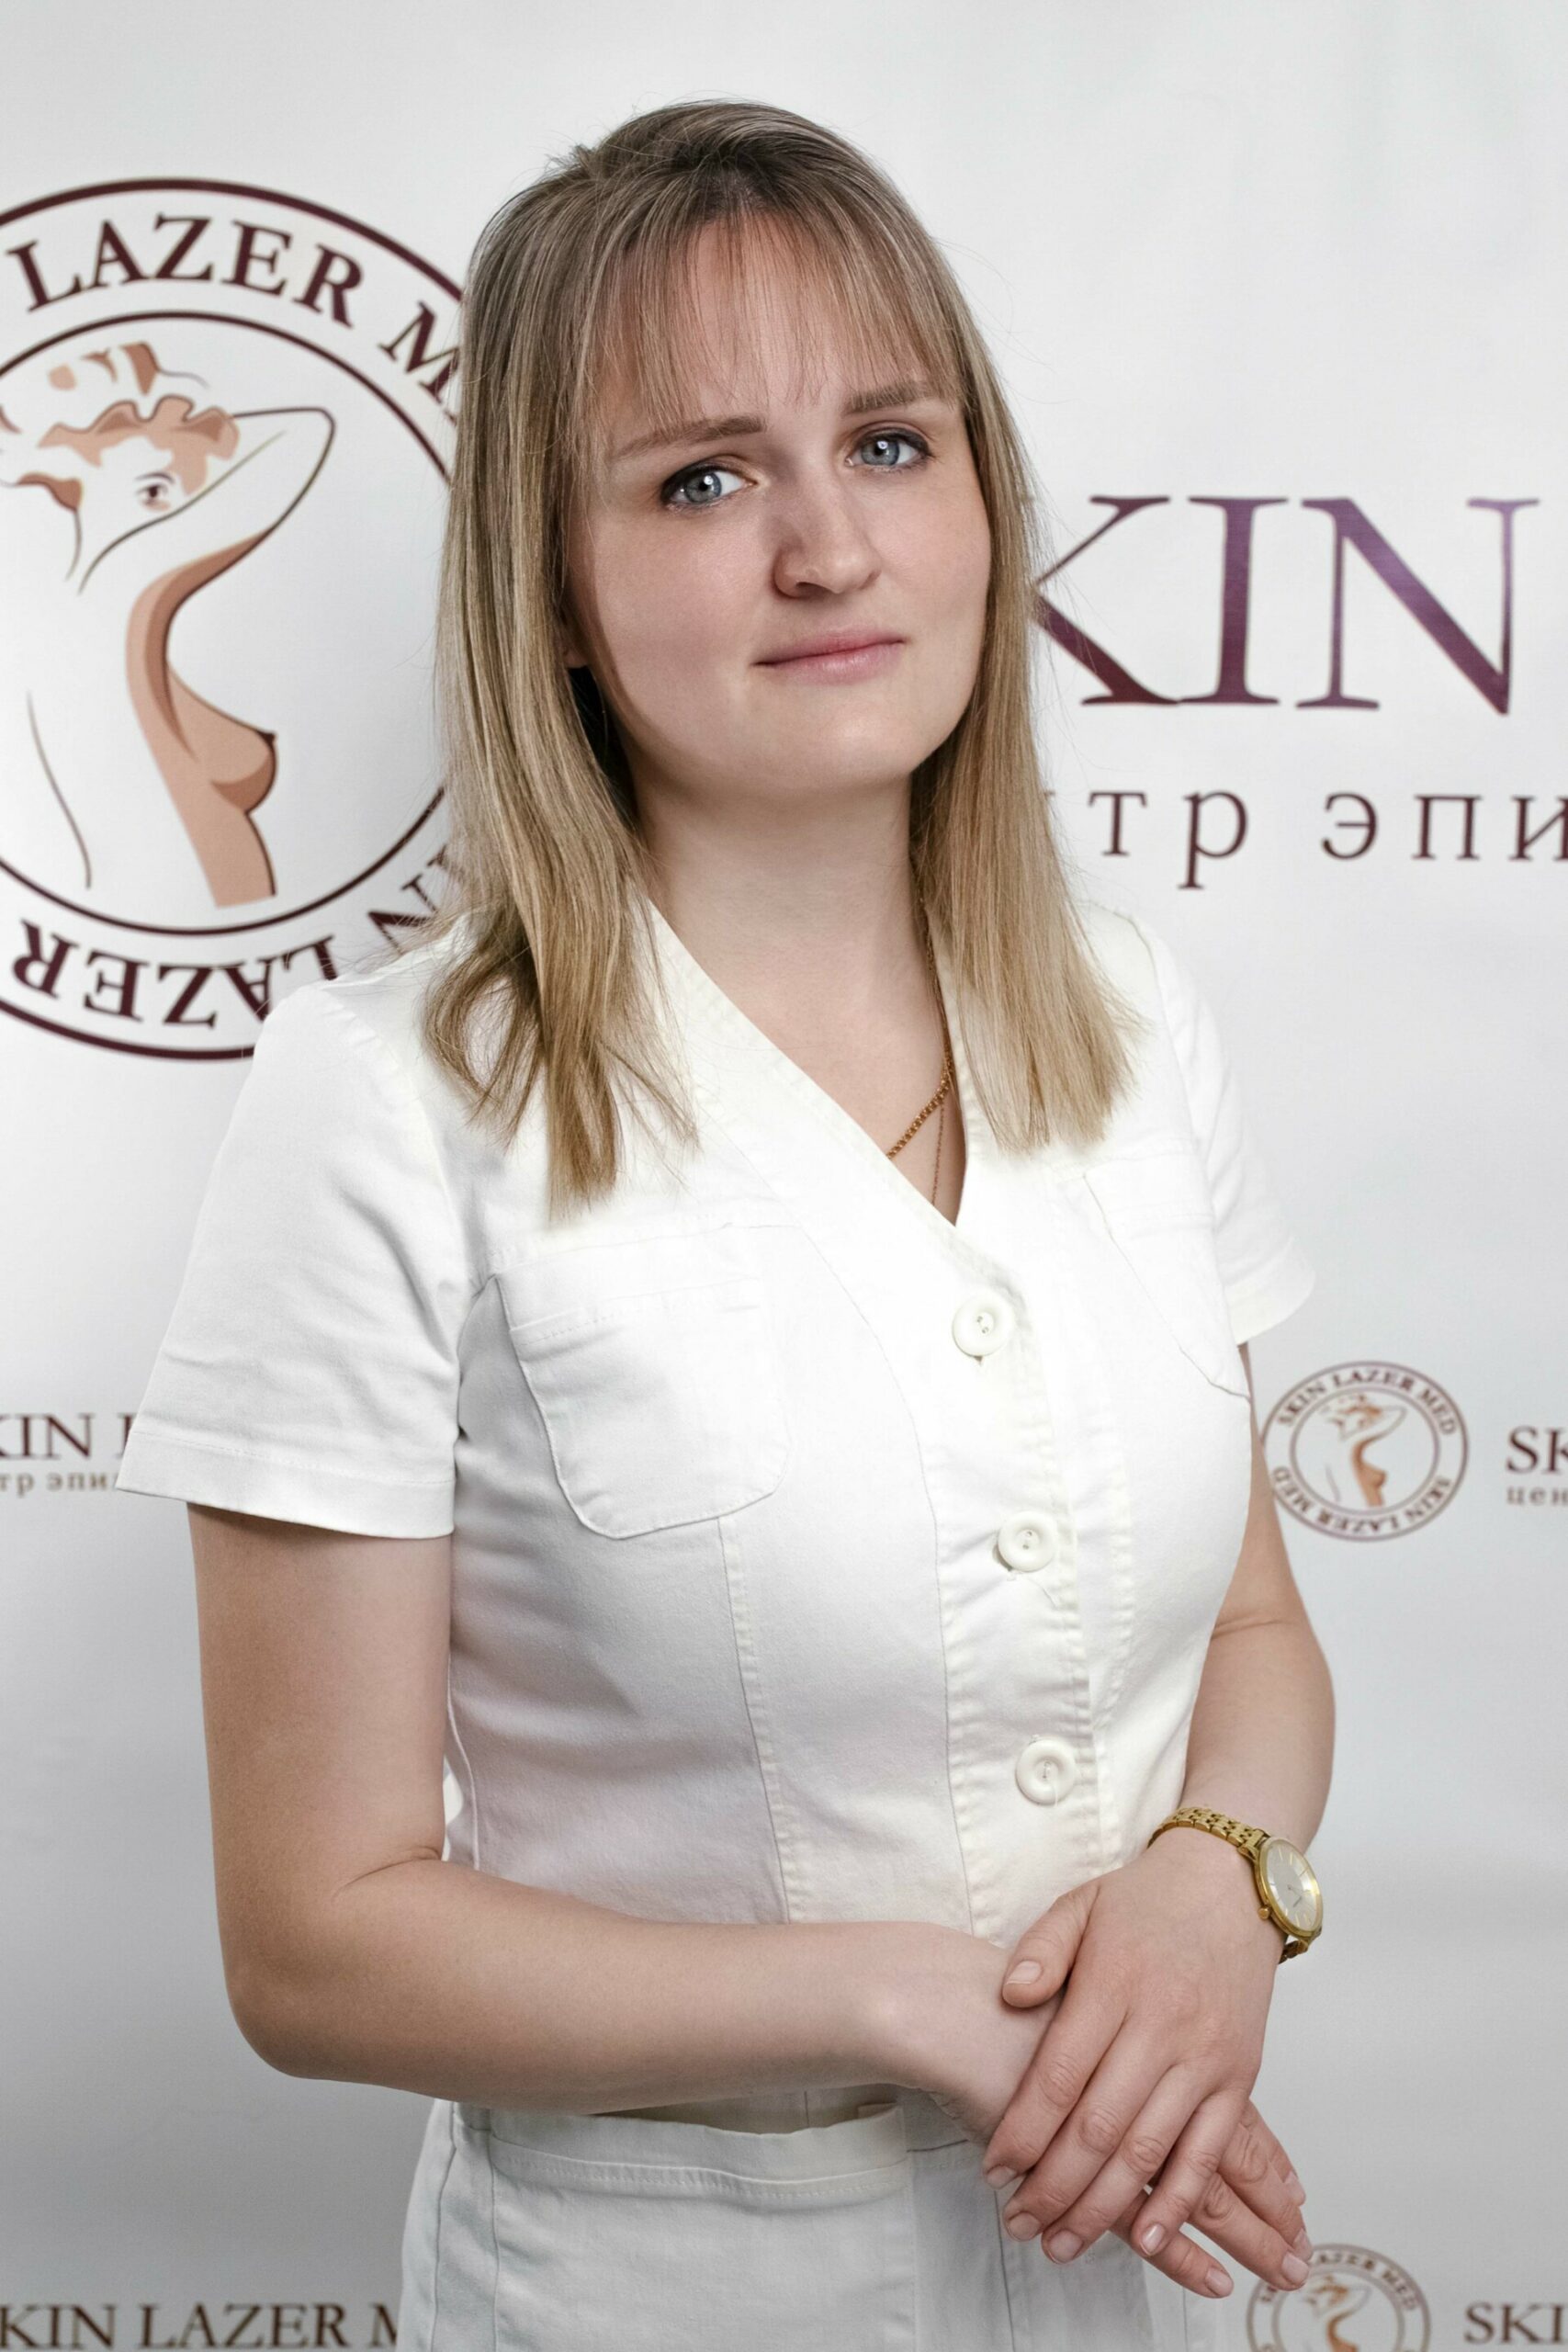 Колотова Мария Александровна, врач косметолог, дерматовенеролог, лазеротерапевт